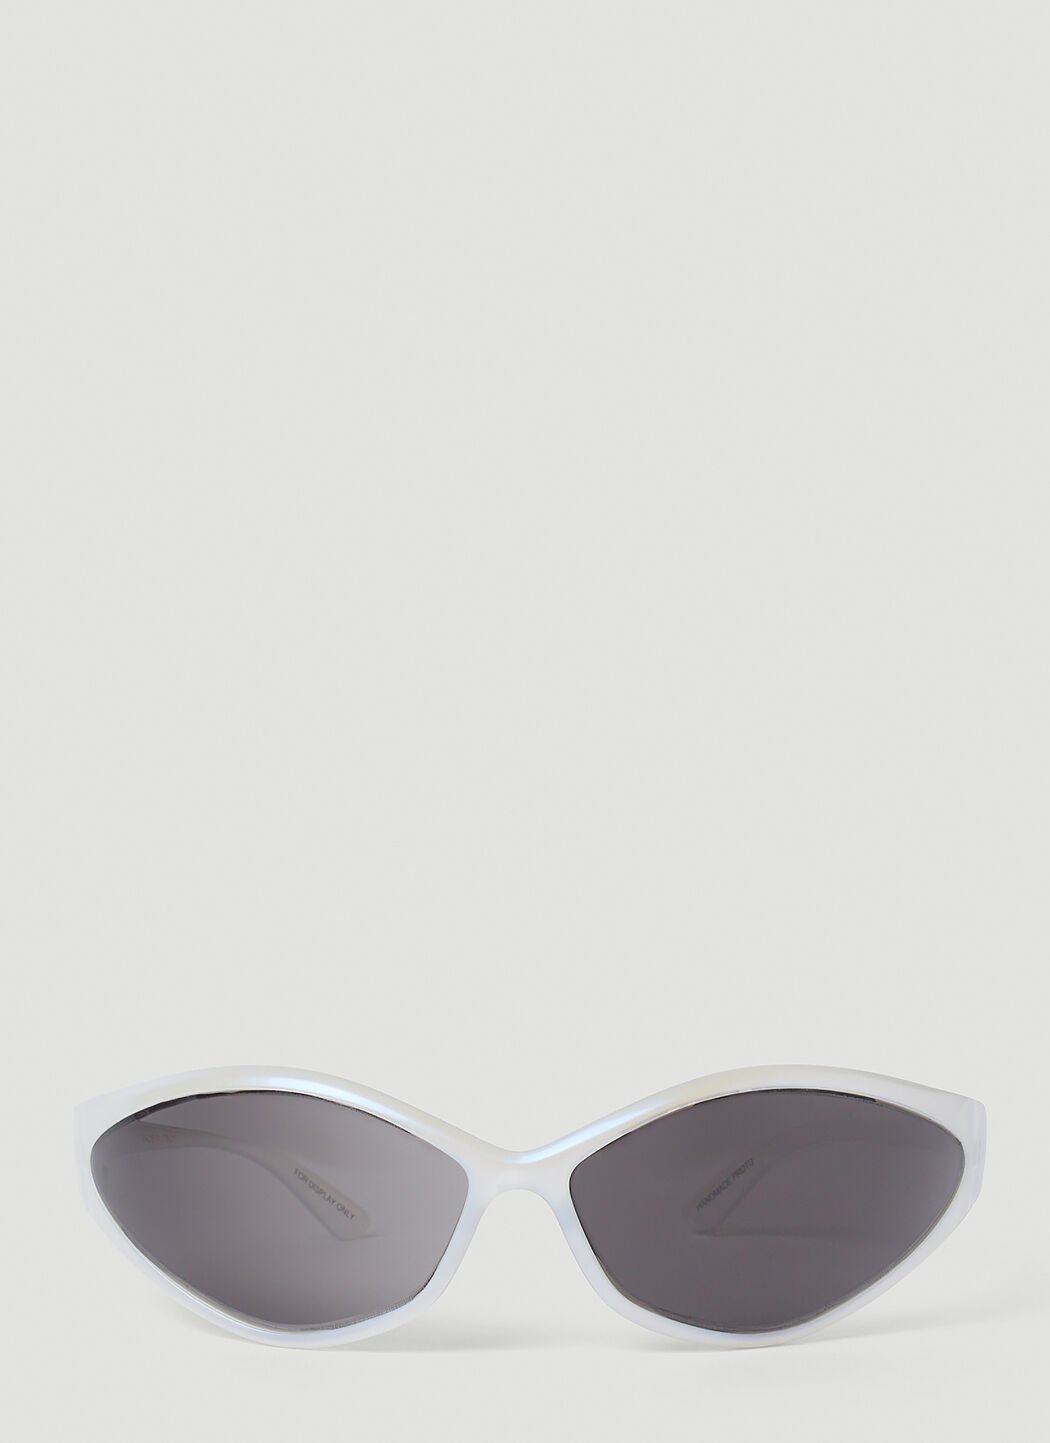 Chloé Swift Oval Sunglasses 블랙 cls0255001